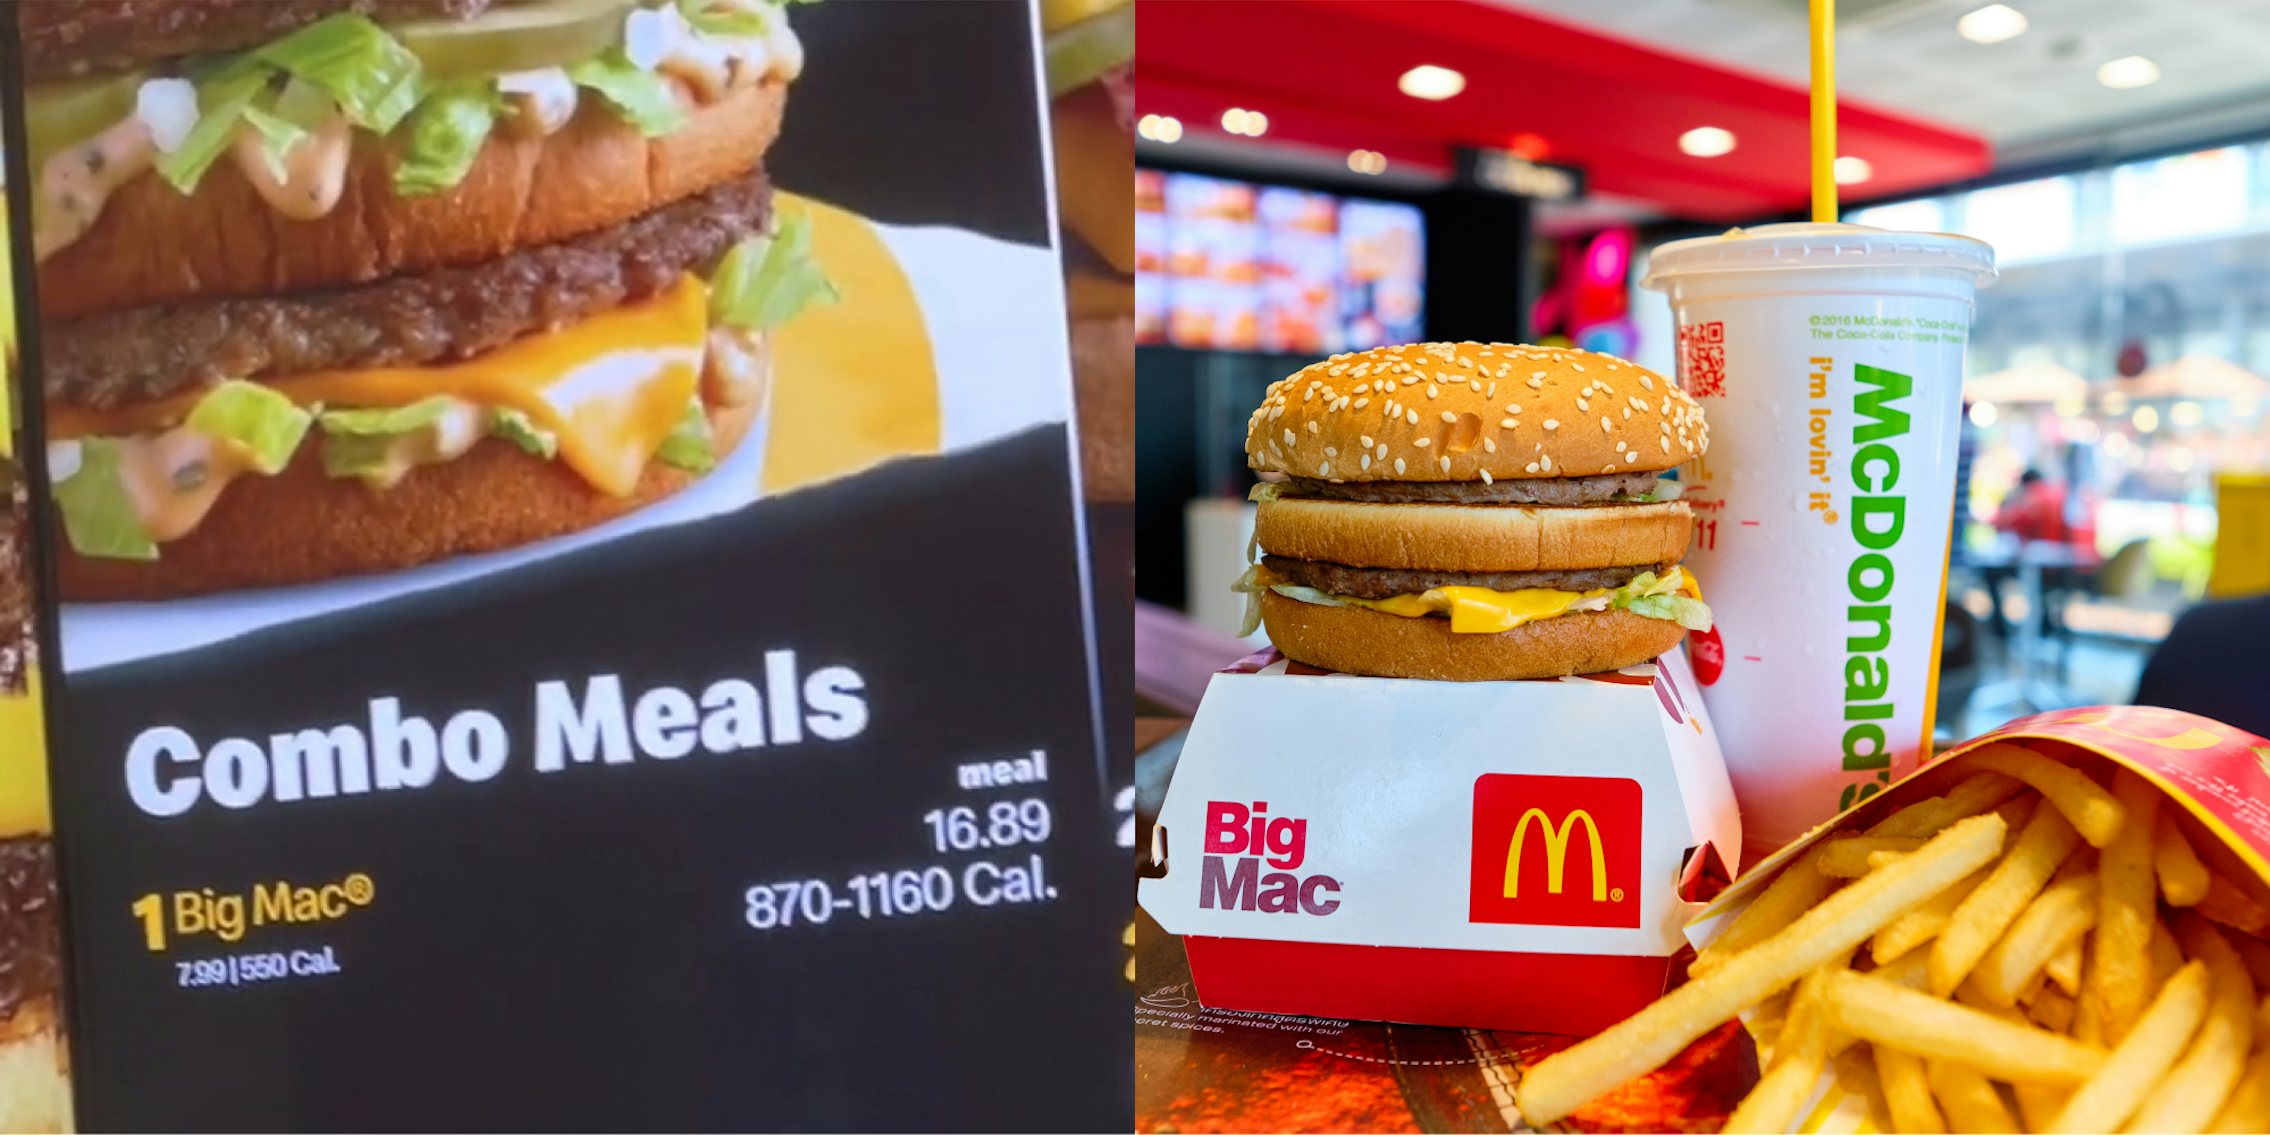 McDonald's menu displaying $16.89 for Big Mac combo meal (l) Big Mac meal at McDonald's (r)